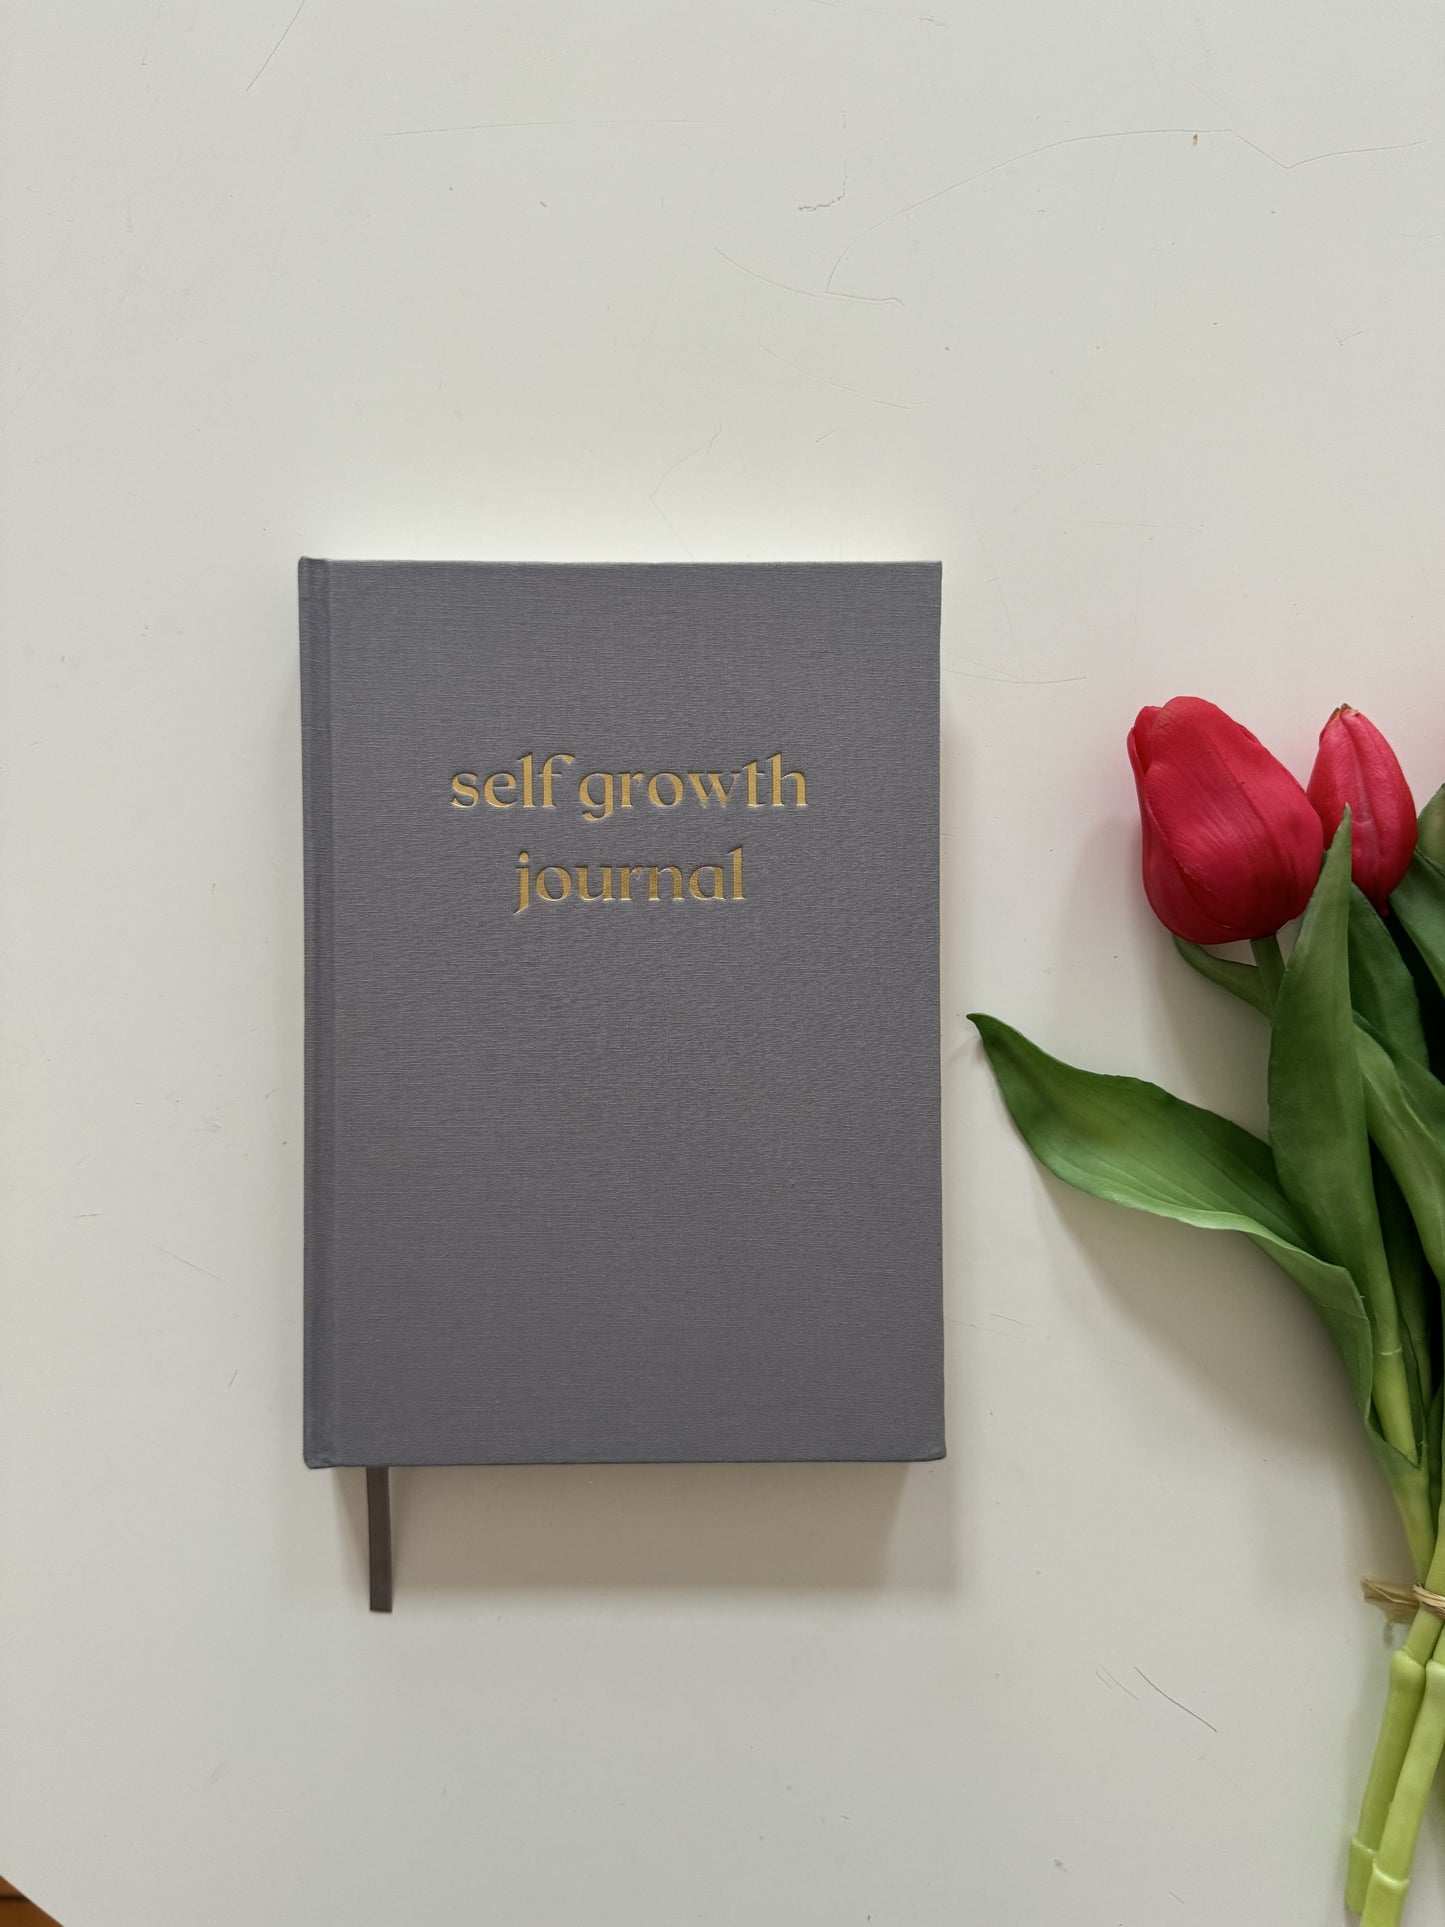 Self-growth journal en Español